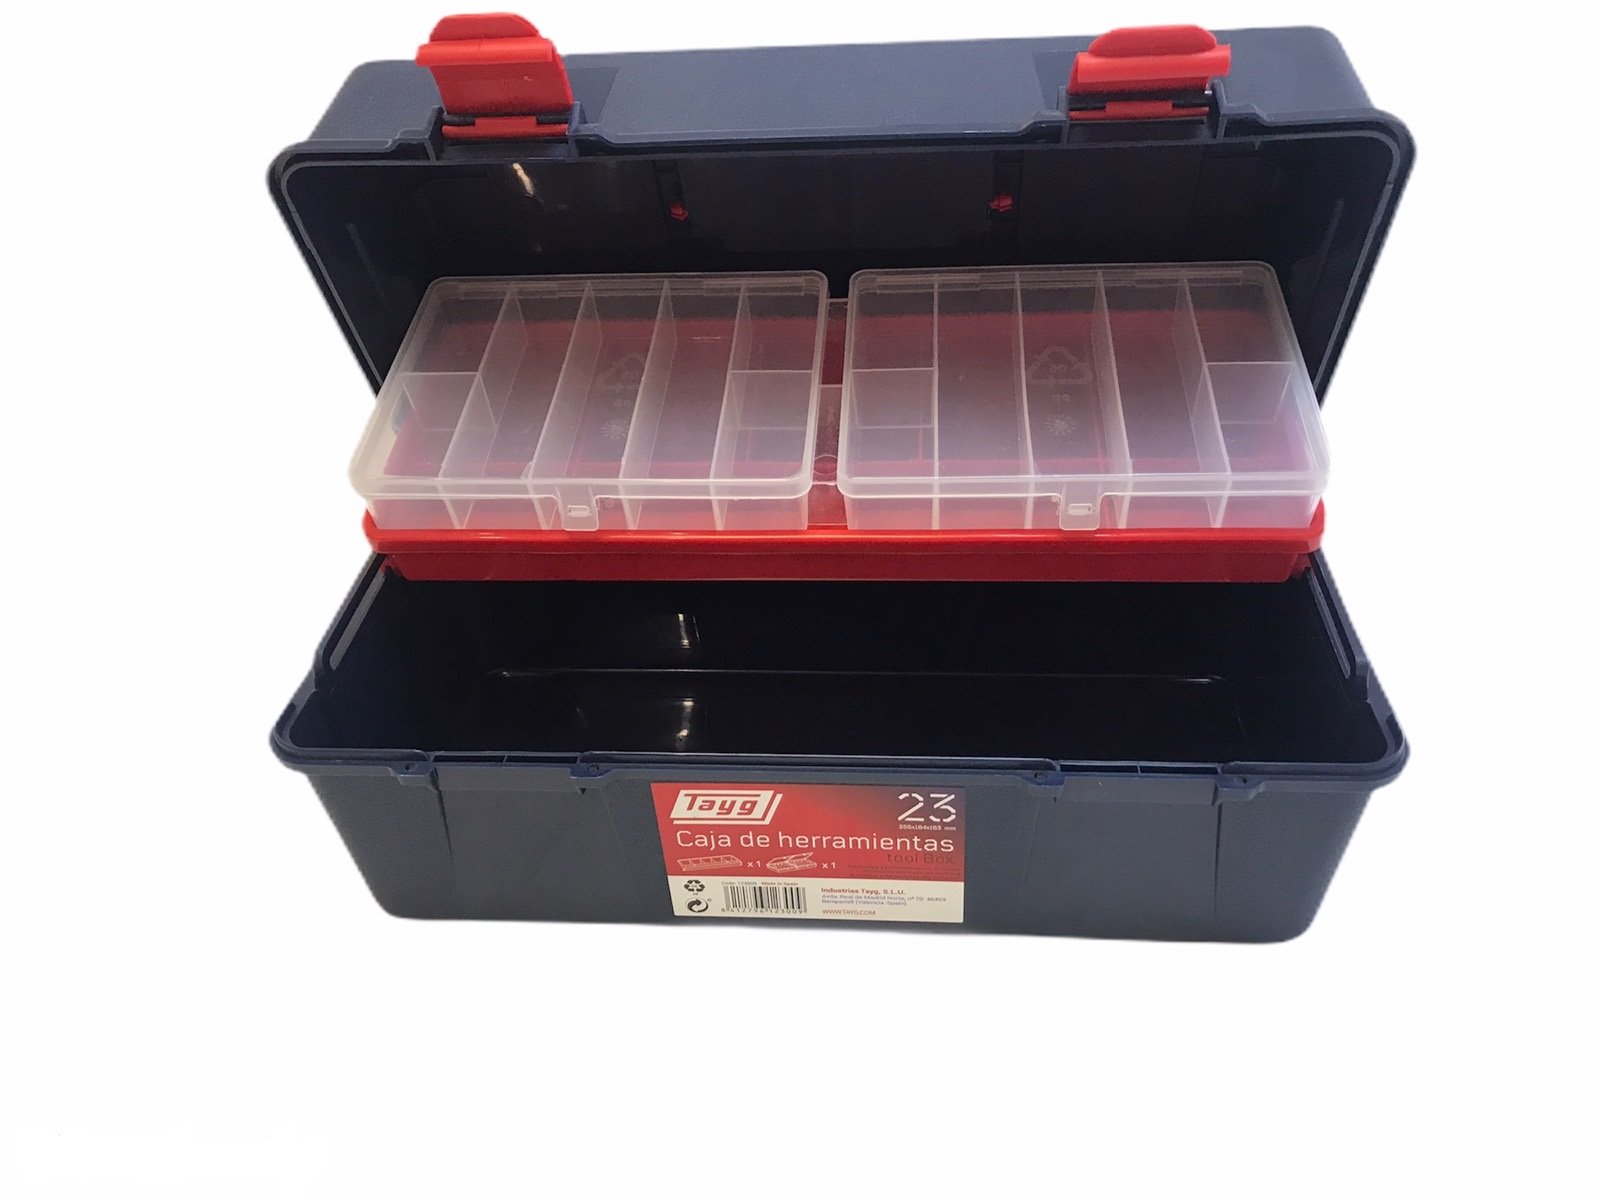 Ящик пластиковый для инструментов Tayg Box 23 Caja htas, с 2 органайзерами, 35,6х18,4х16,3 см, синий (123009) - фото 3